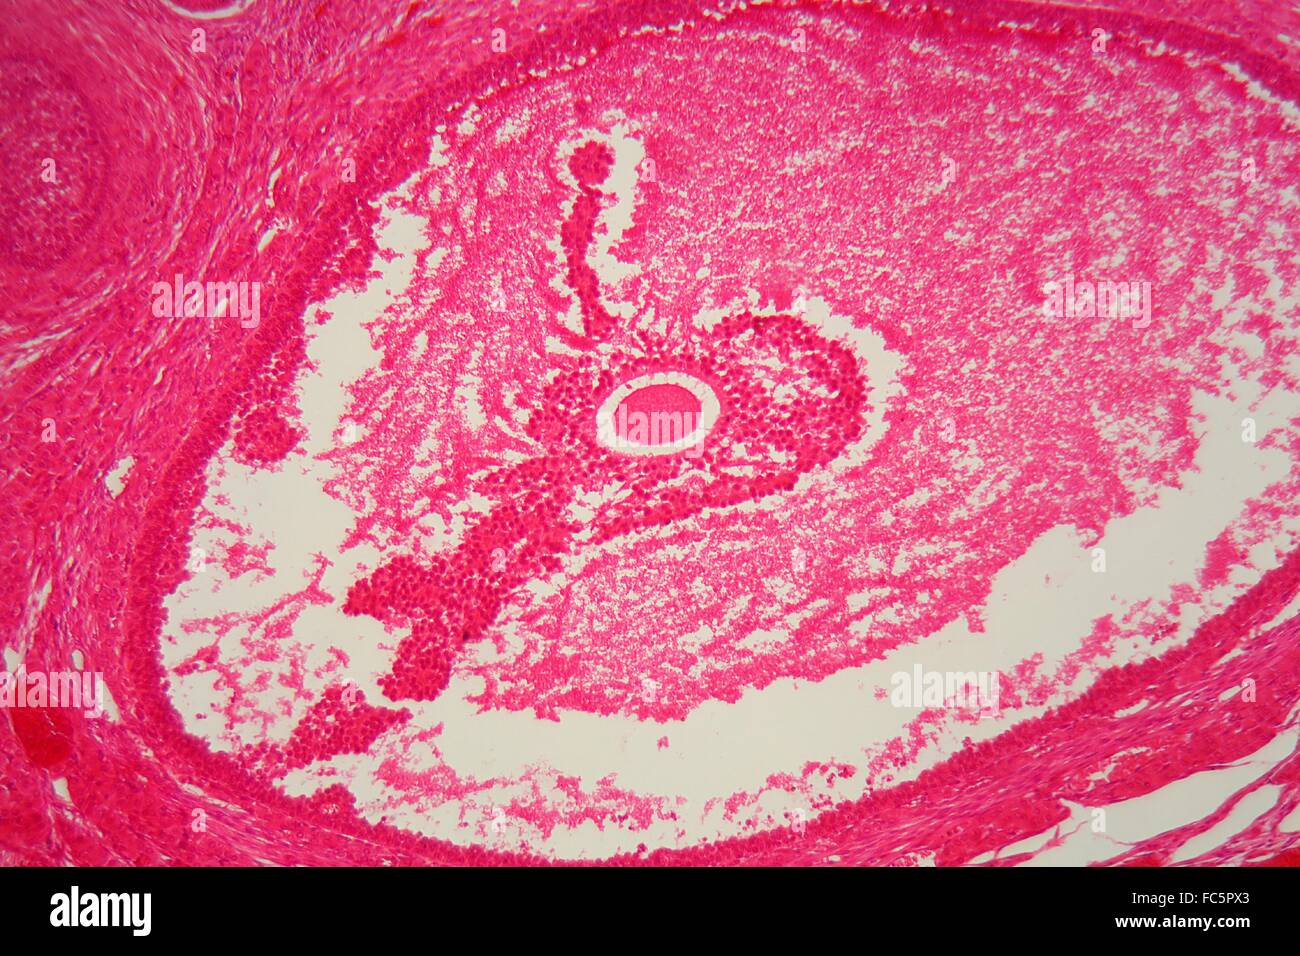 Ovary tissue under the microscope. Stock Photo